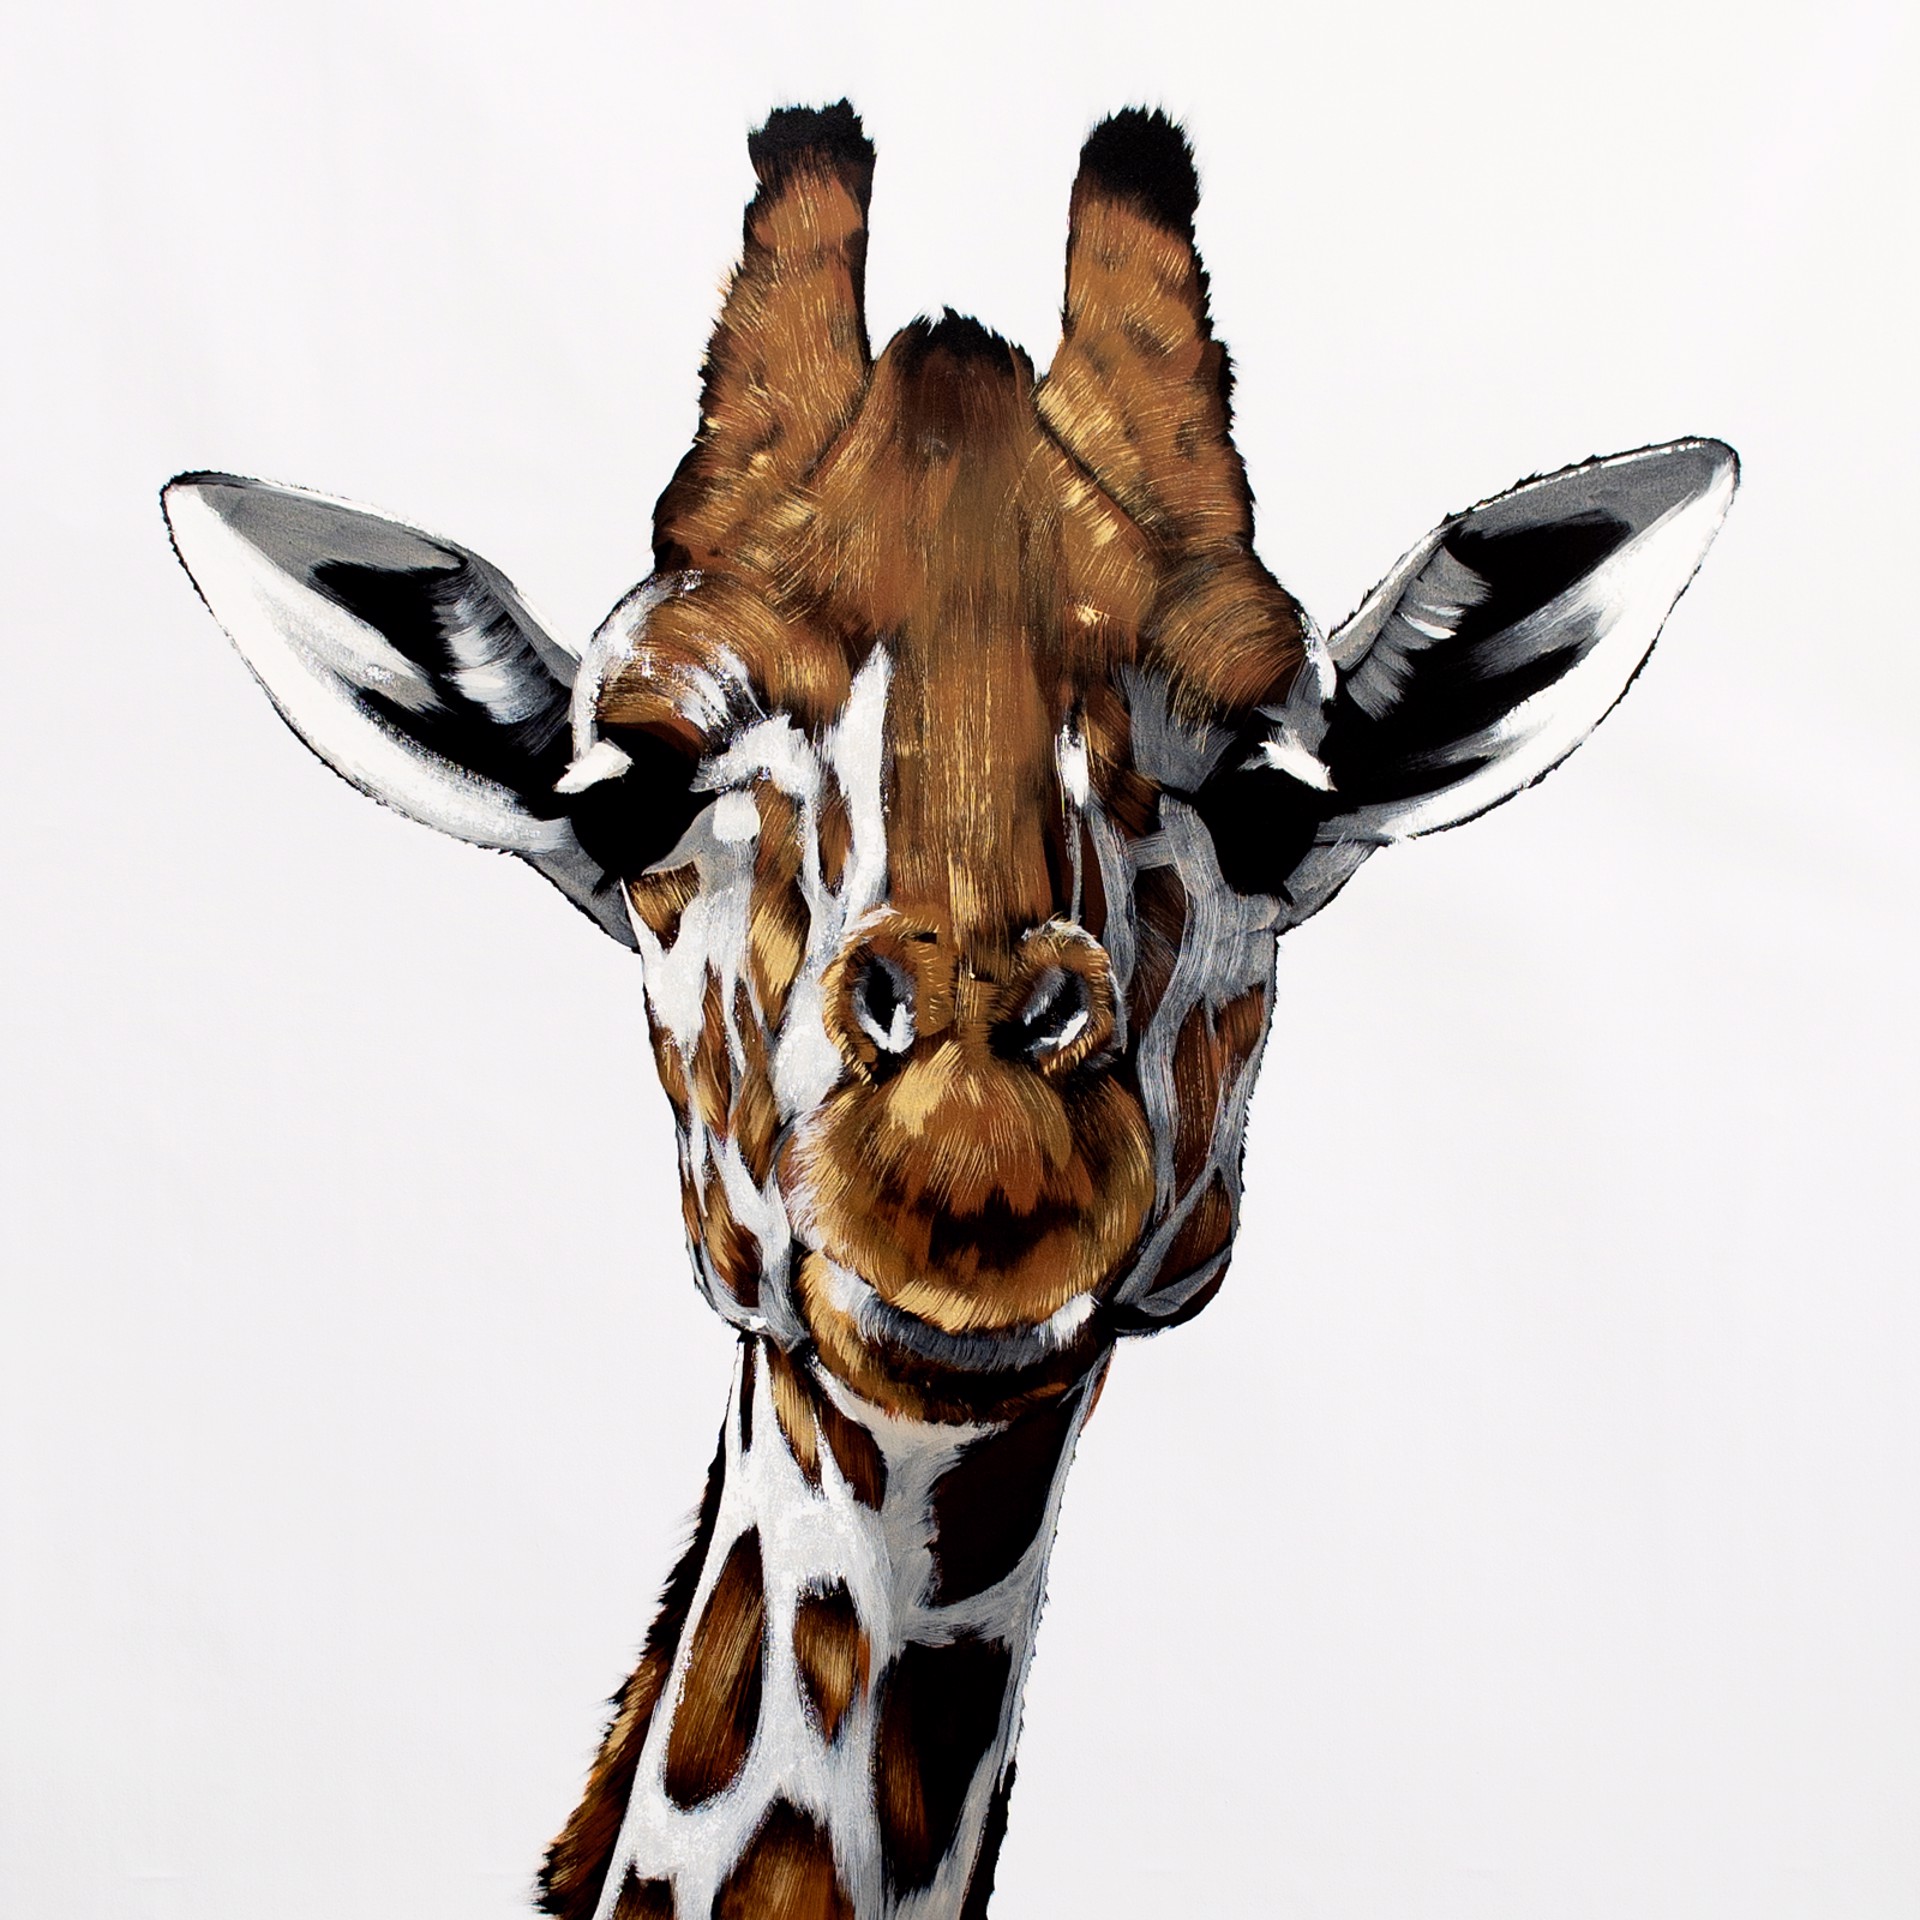 Giraffe on White by Josh Brown